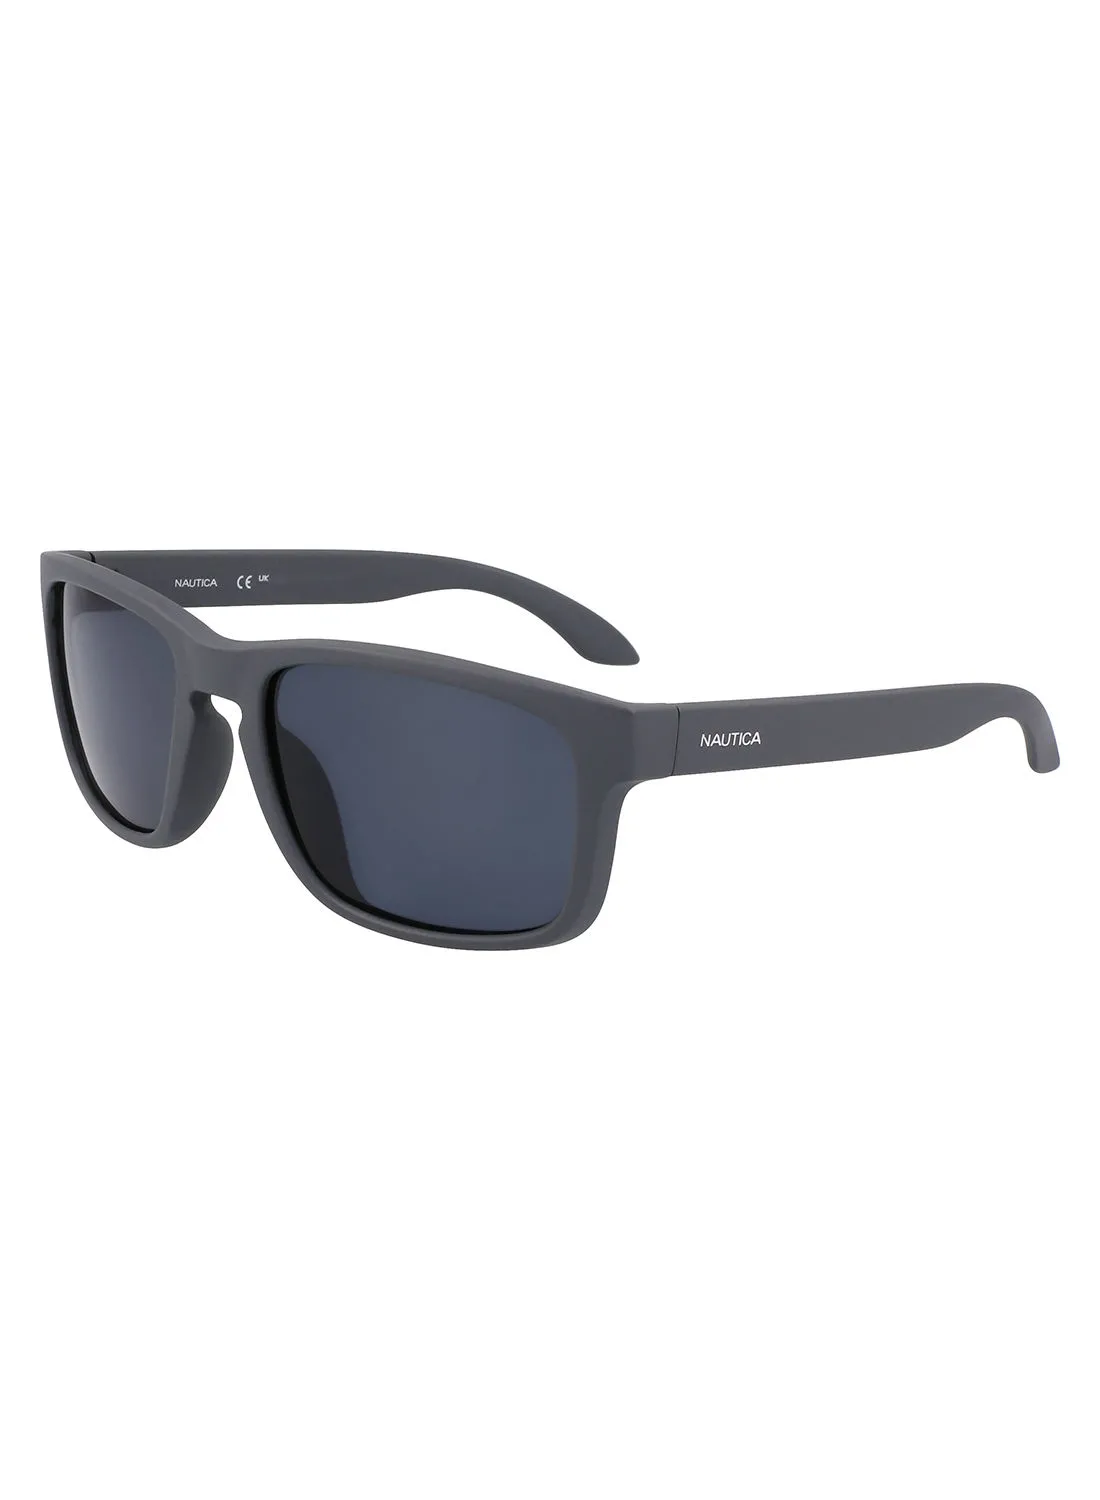 NAUTICA Men's Rectangular Sunglasses - N2247S-020-5719 - Lens Size: 57 Mm